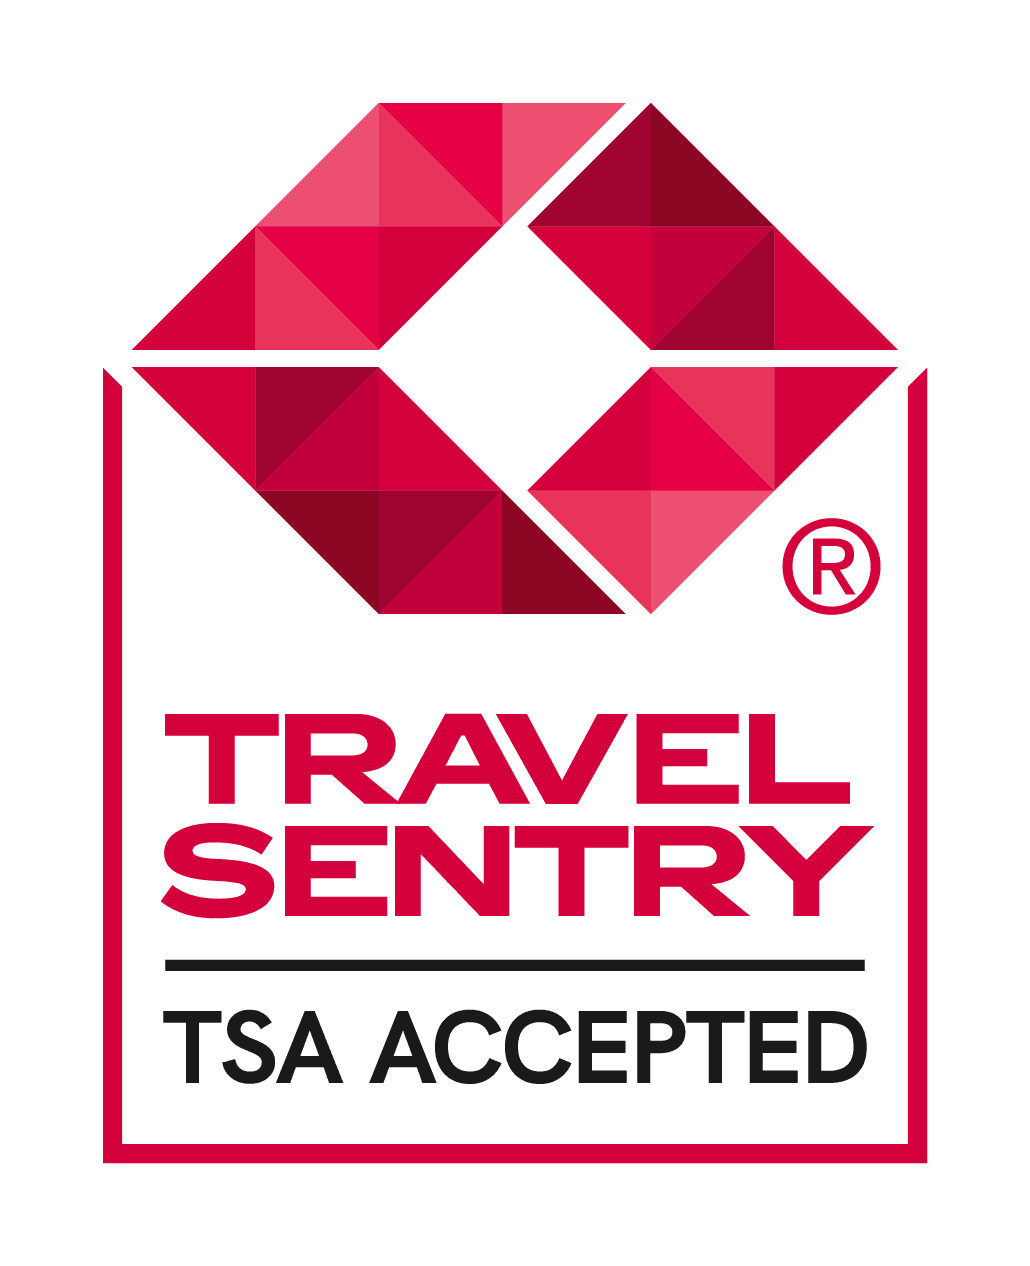 travel sentry tsa accepted